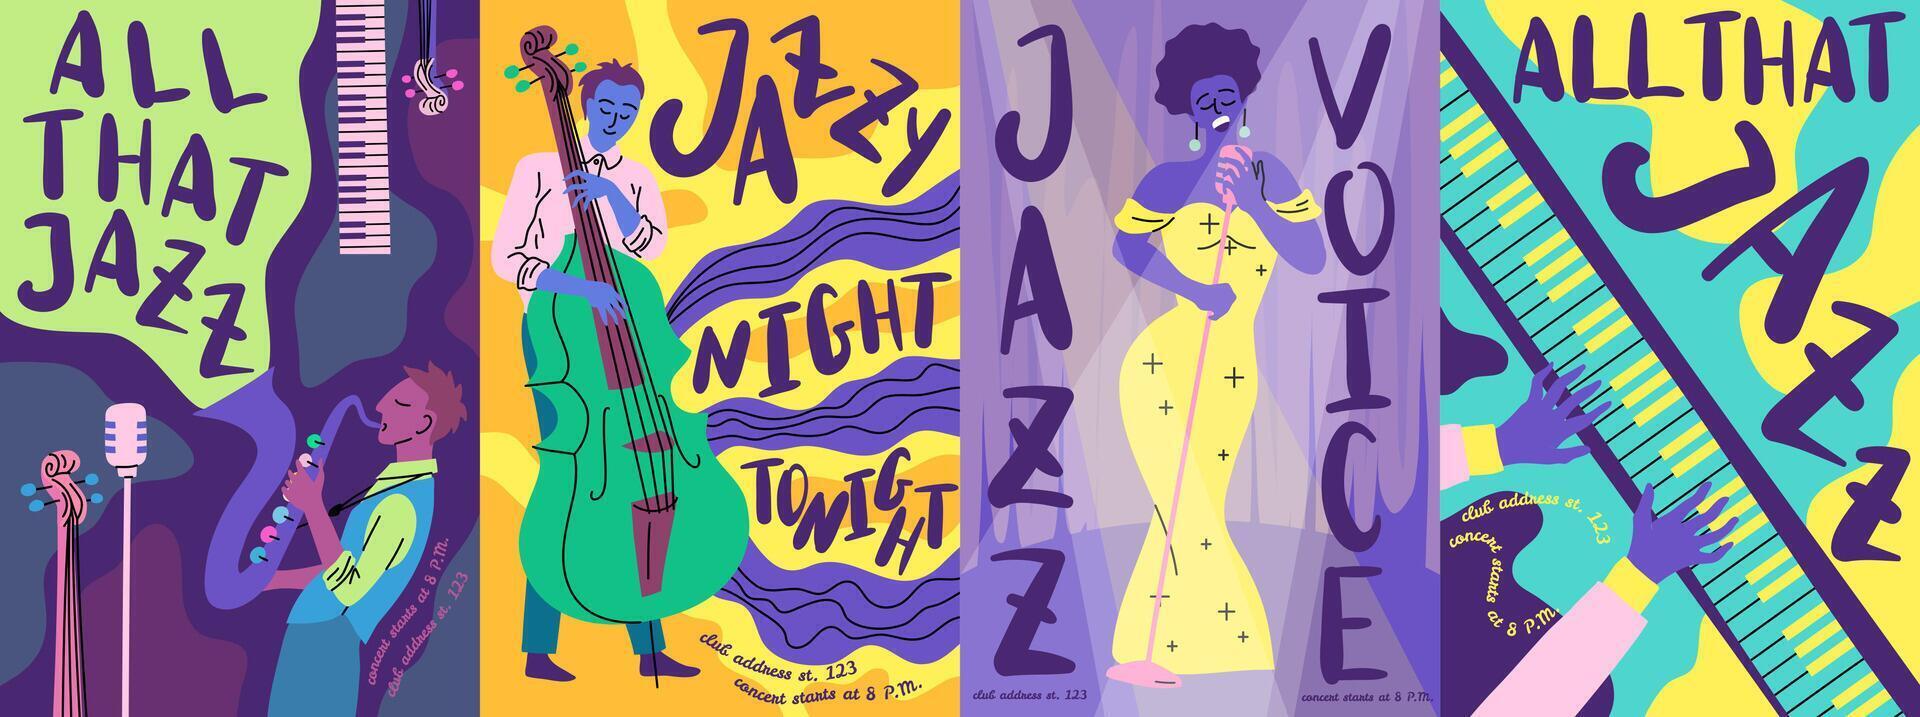 dibujos animados color jazz música festival póster tarjeta colocar. vector